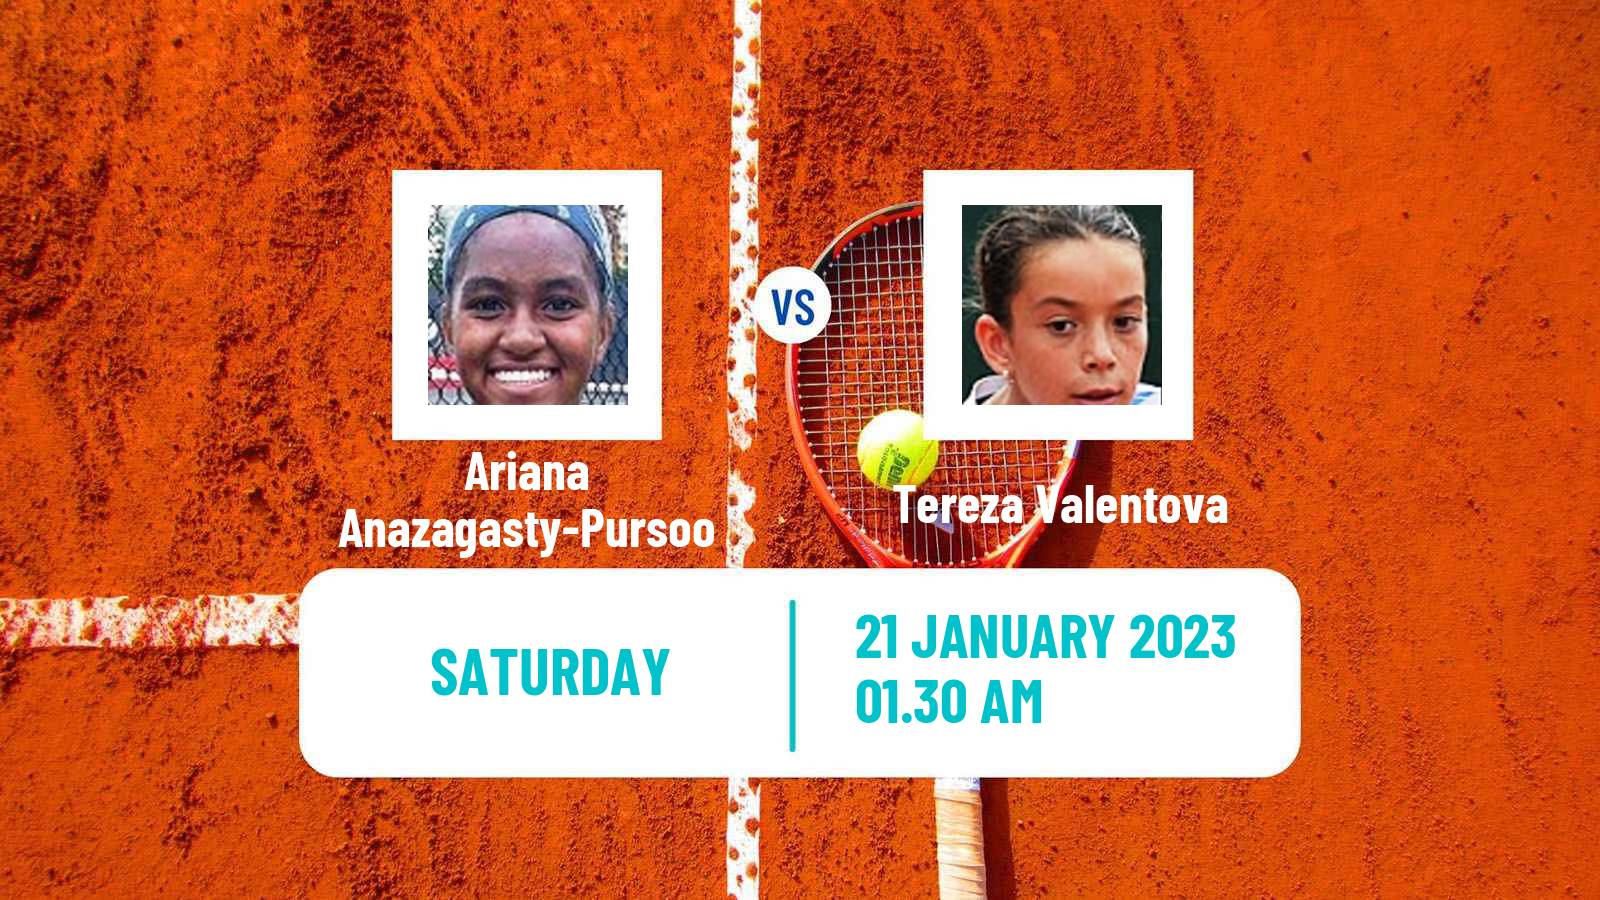 Tennis Girls Singles Australian Open Ariana Anazagasty-Pursoo - Tereza Valentova